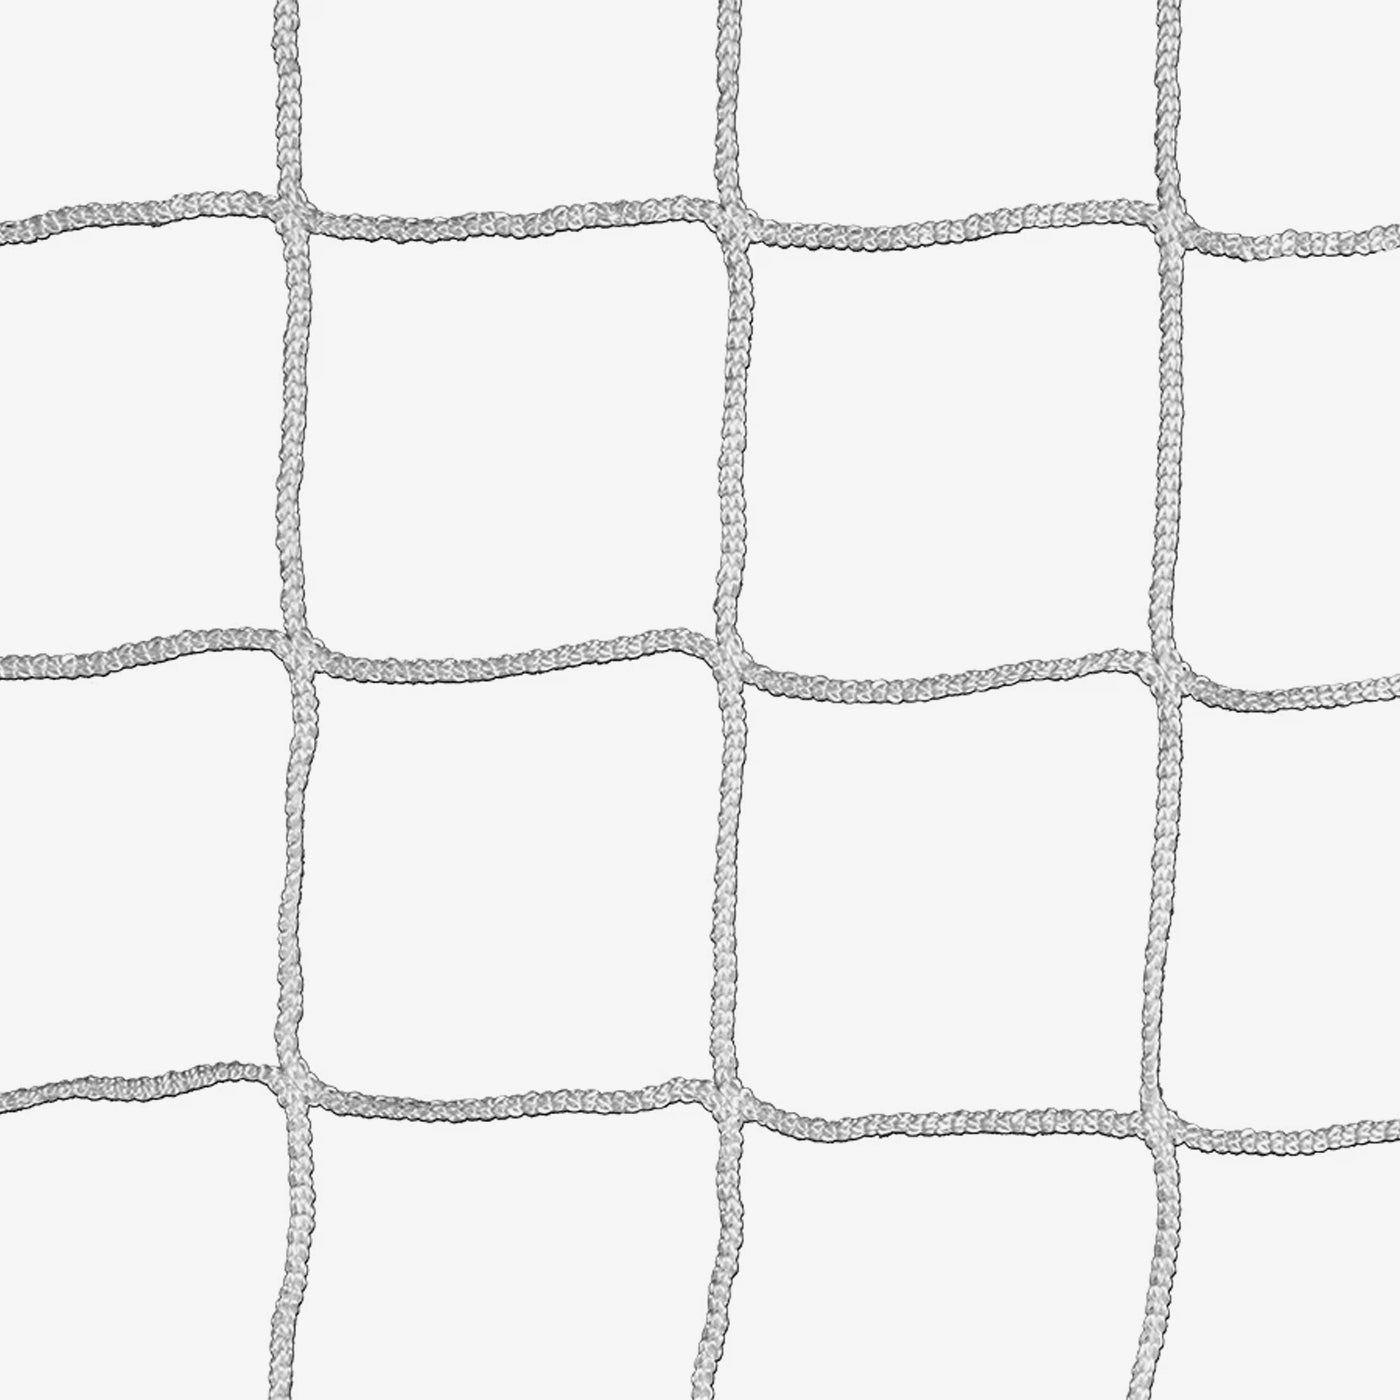 8H x 24W x 3D x 8 1/2B, 120mm mesh, Solid Braid Knotless Goal Net